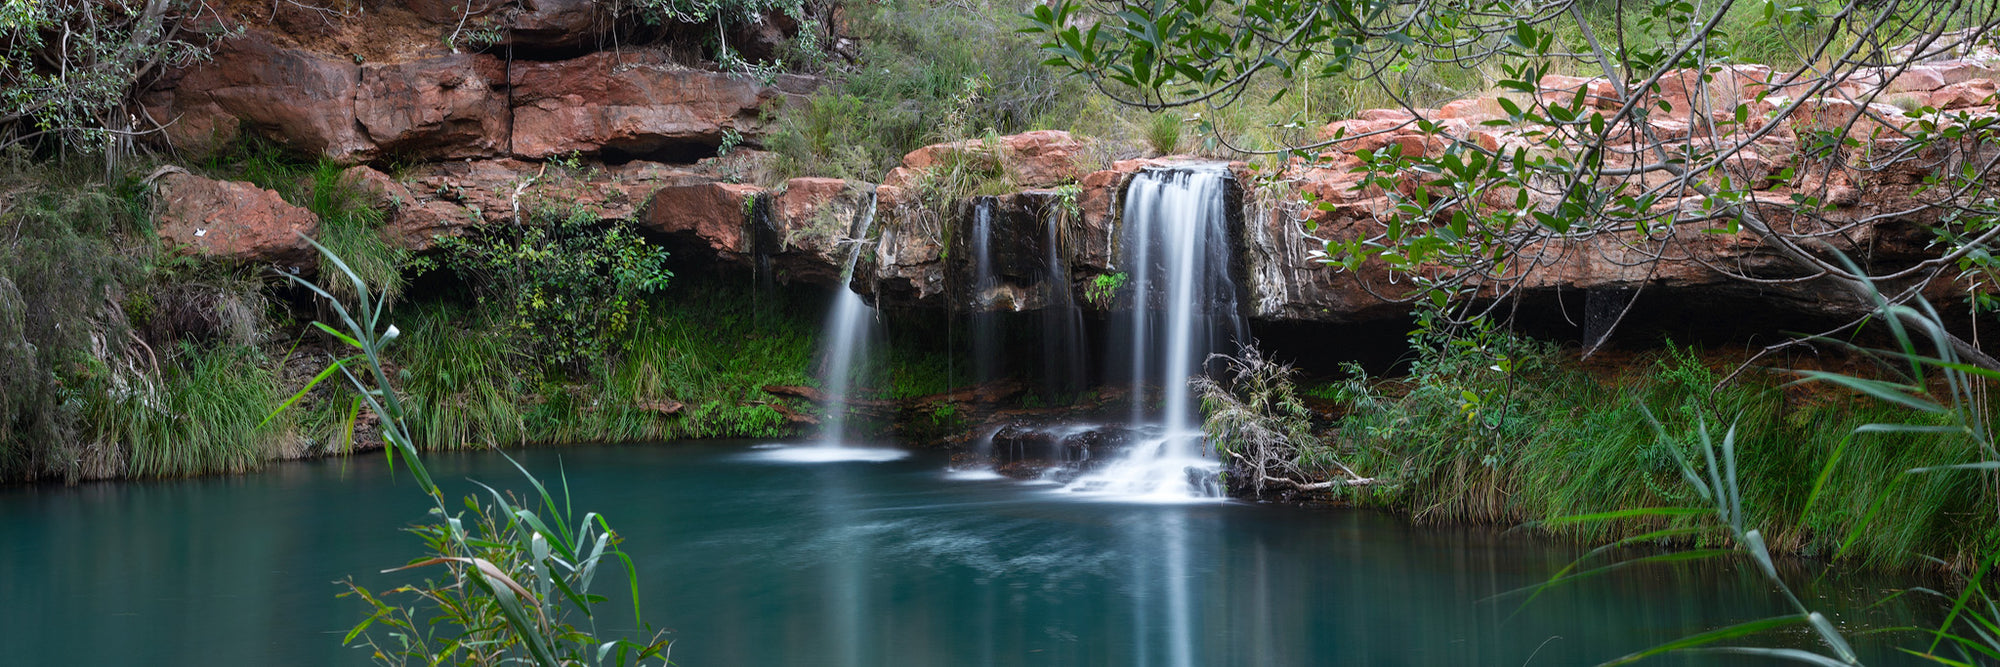 Panoramic image of Fern Pool in Karijini National Park Western Australia Sally Nevin Photography